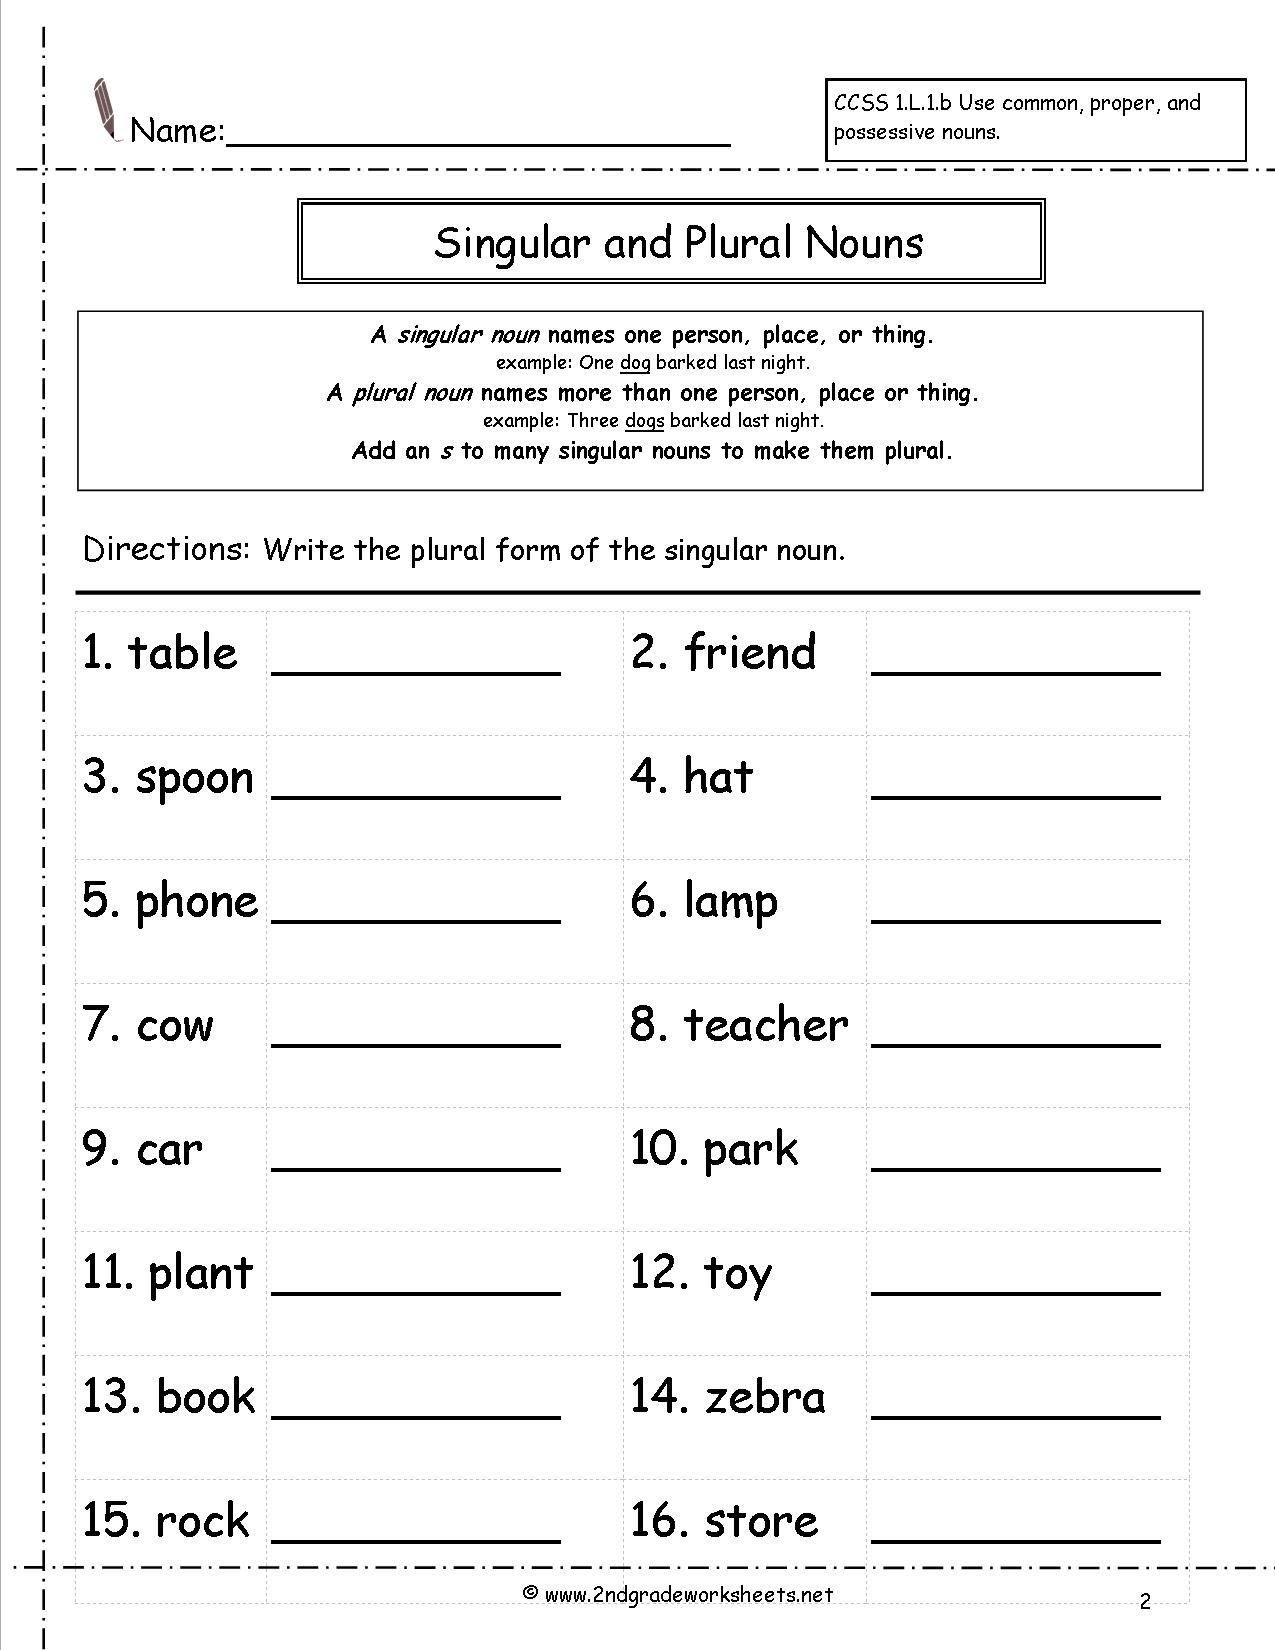 plural-nouns-worksheet